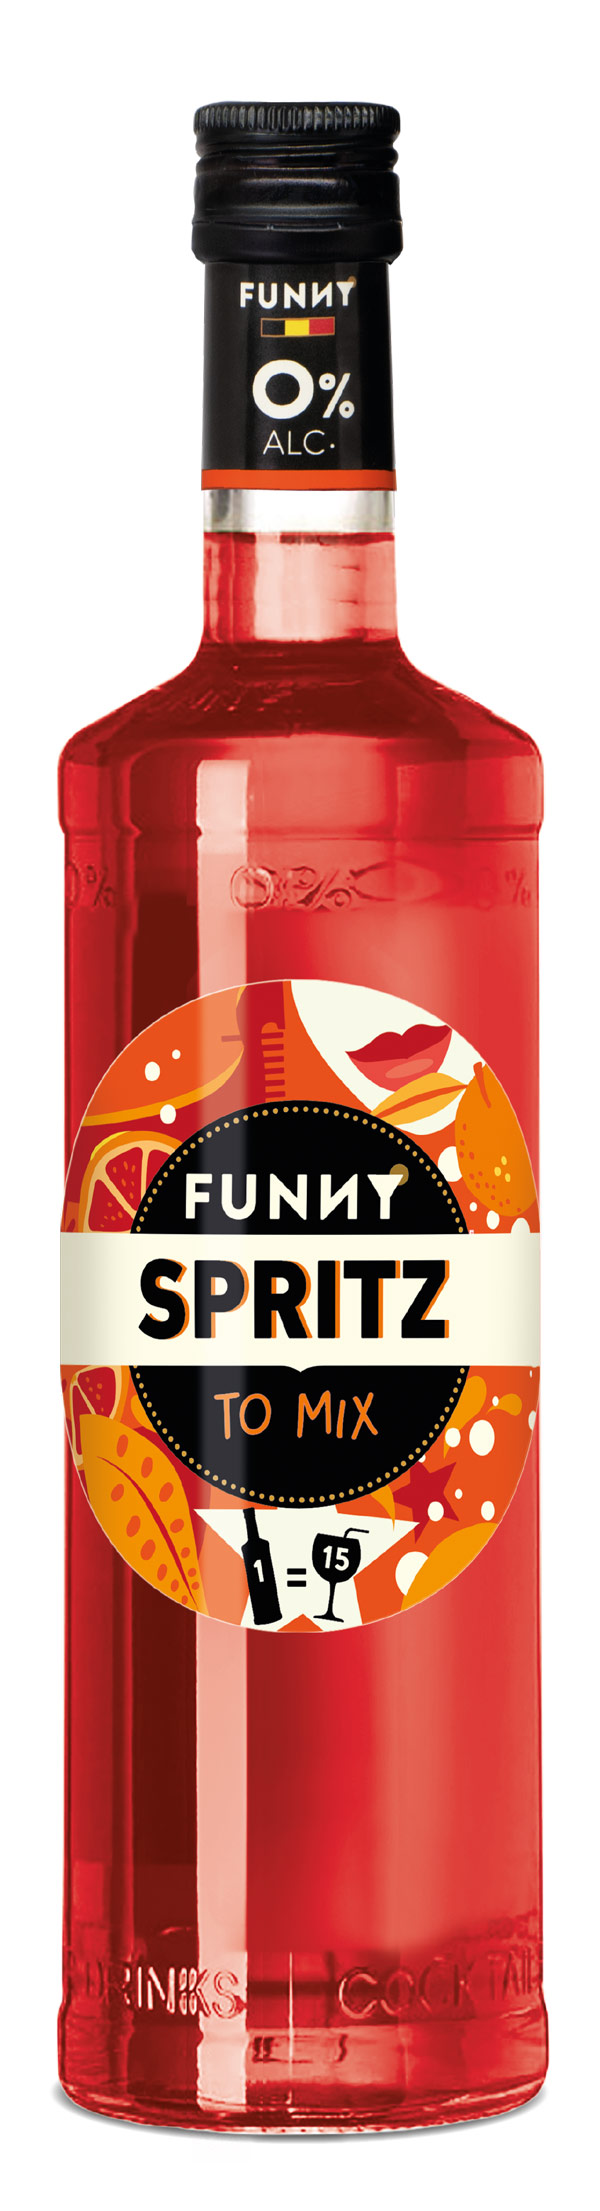 Funny spritz sans alcool 75cl